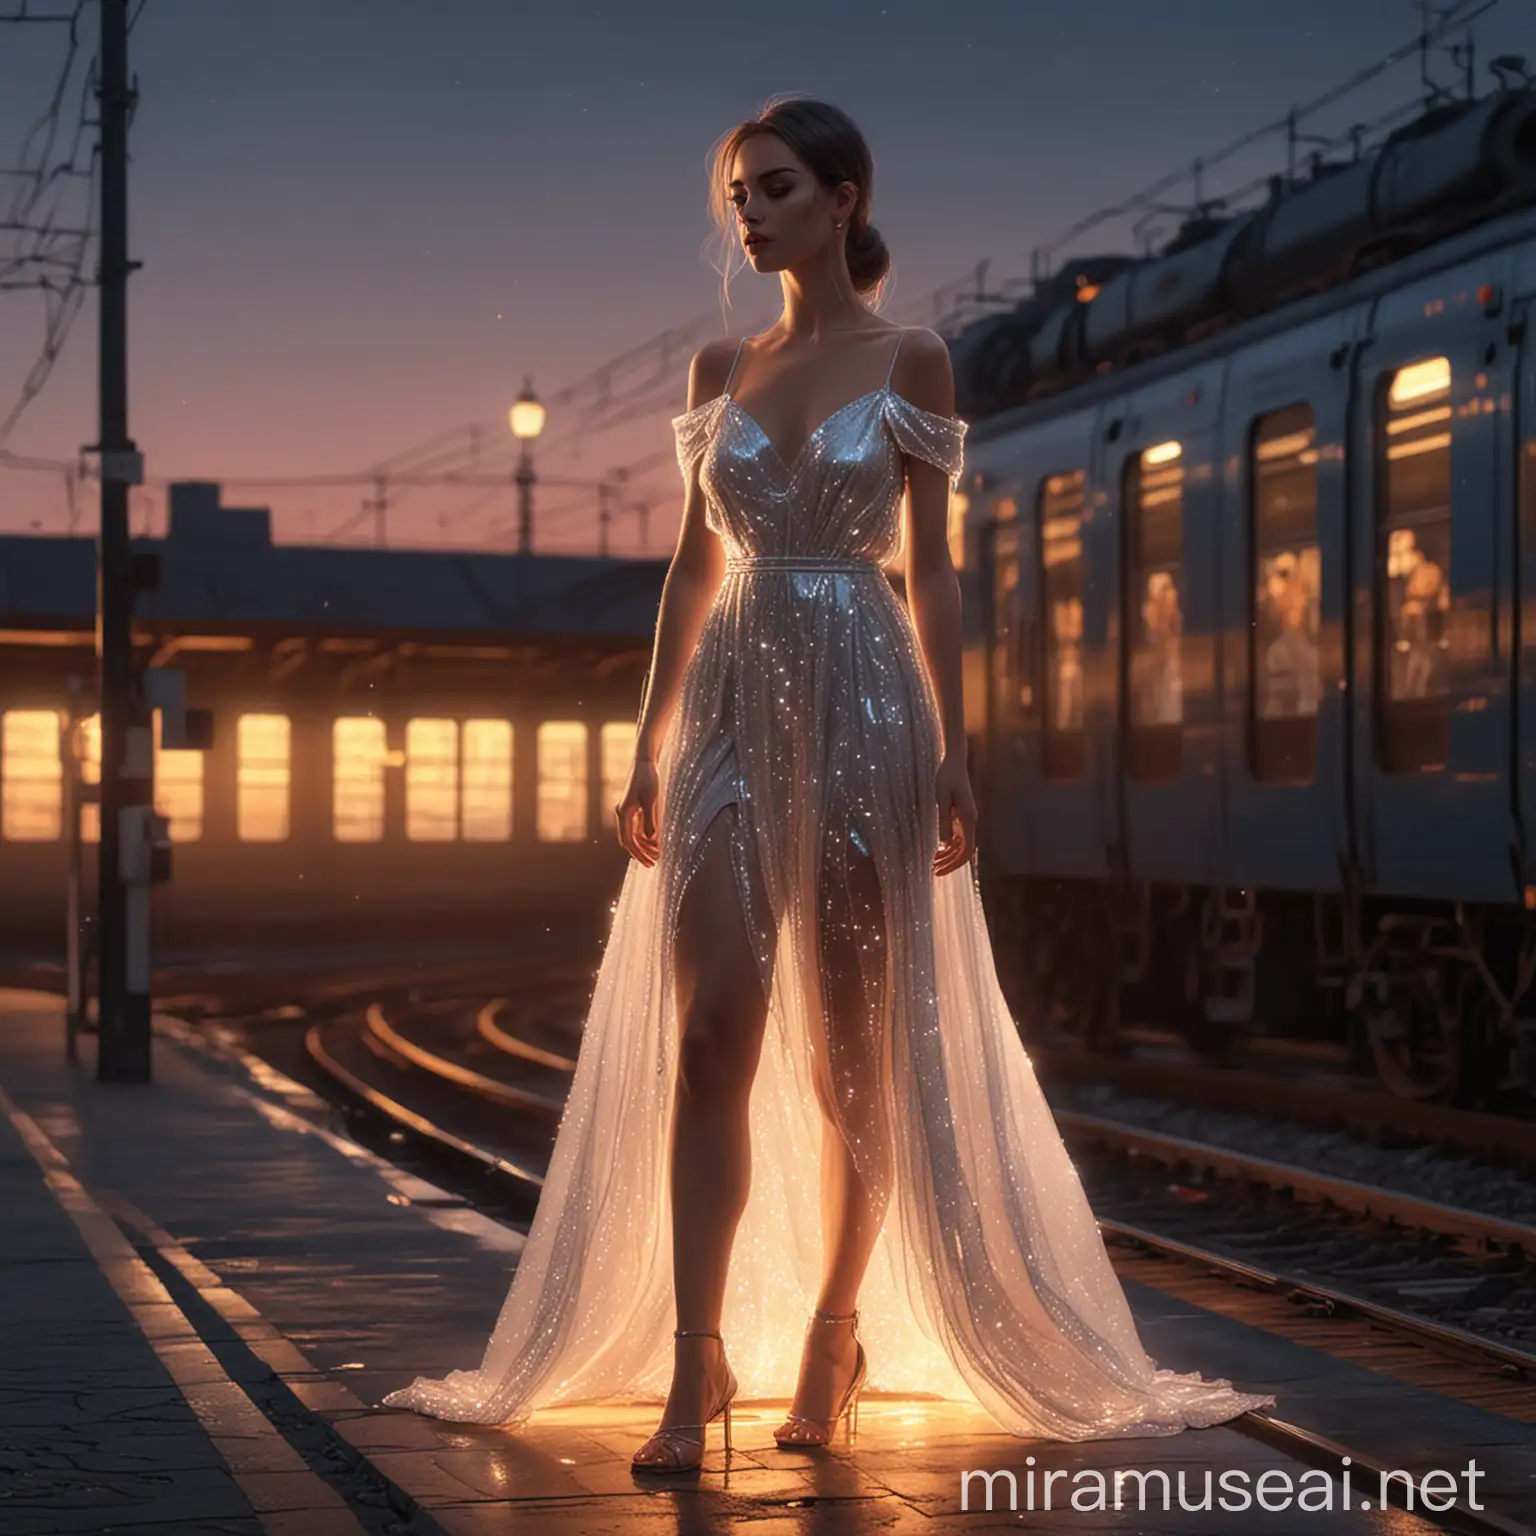 Elegant Woman in Glittering Dress at Train Station Sunset